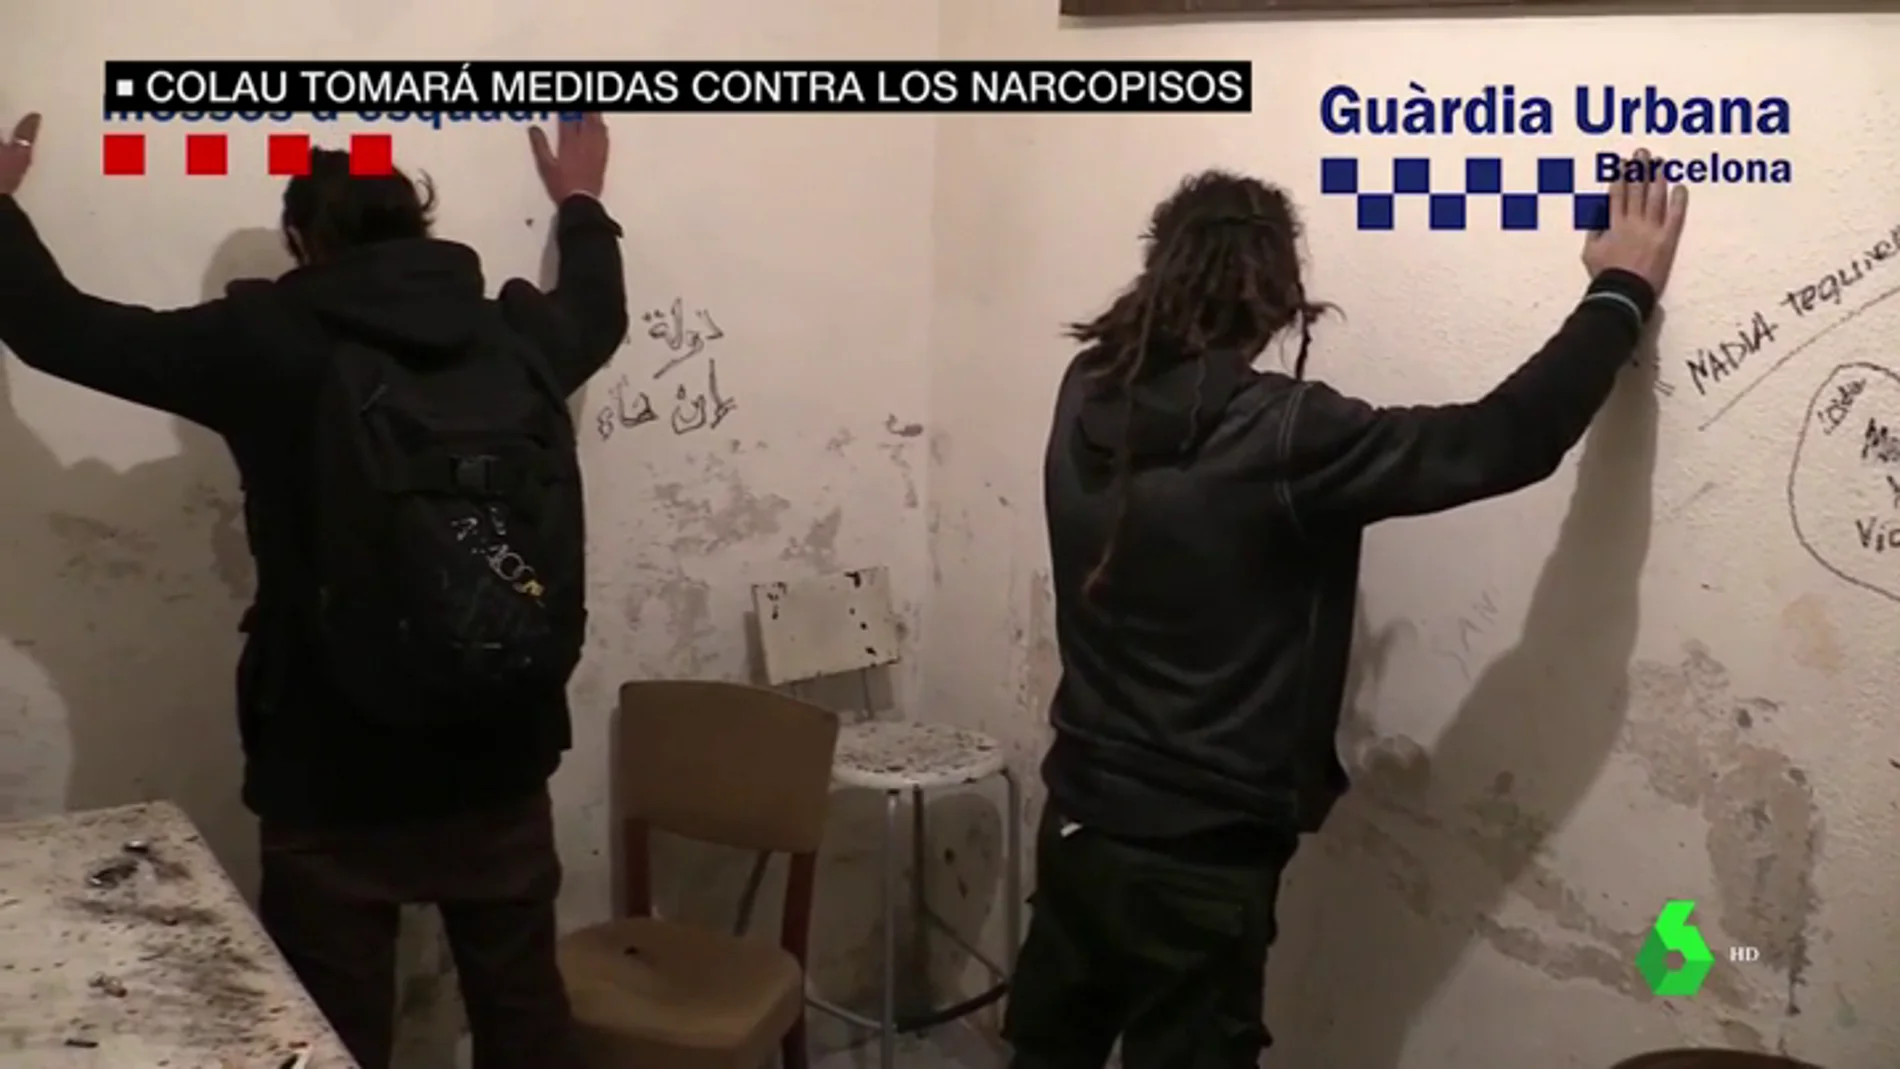 Imagen de un narcopiso en Barcelona